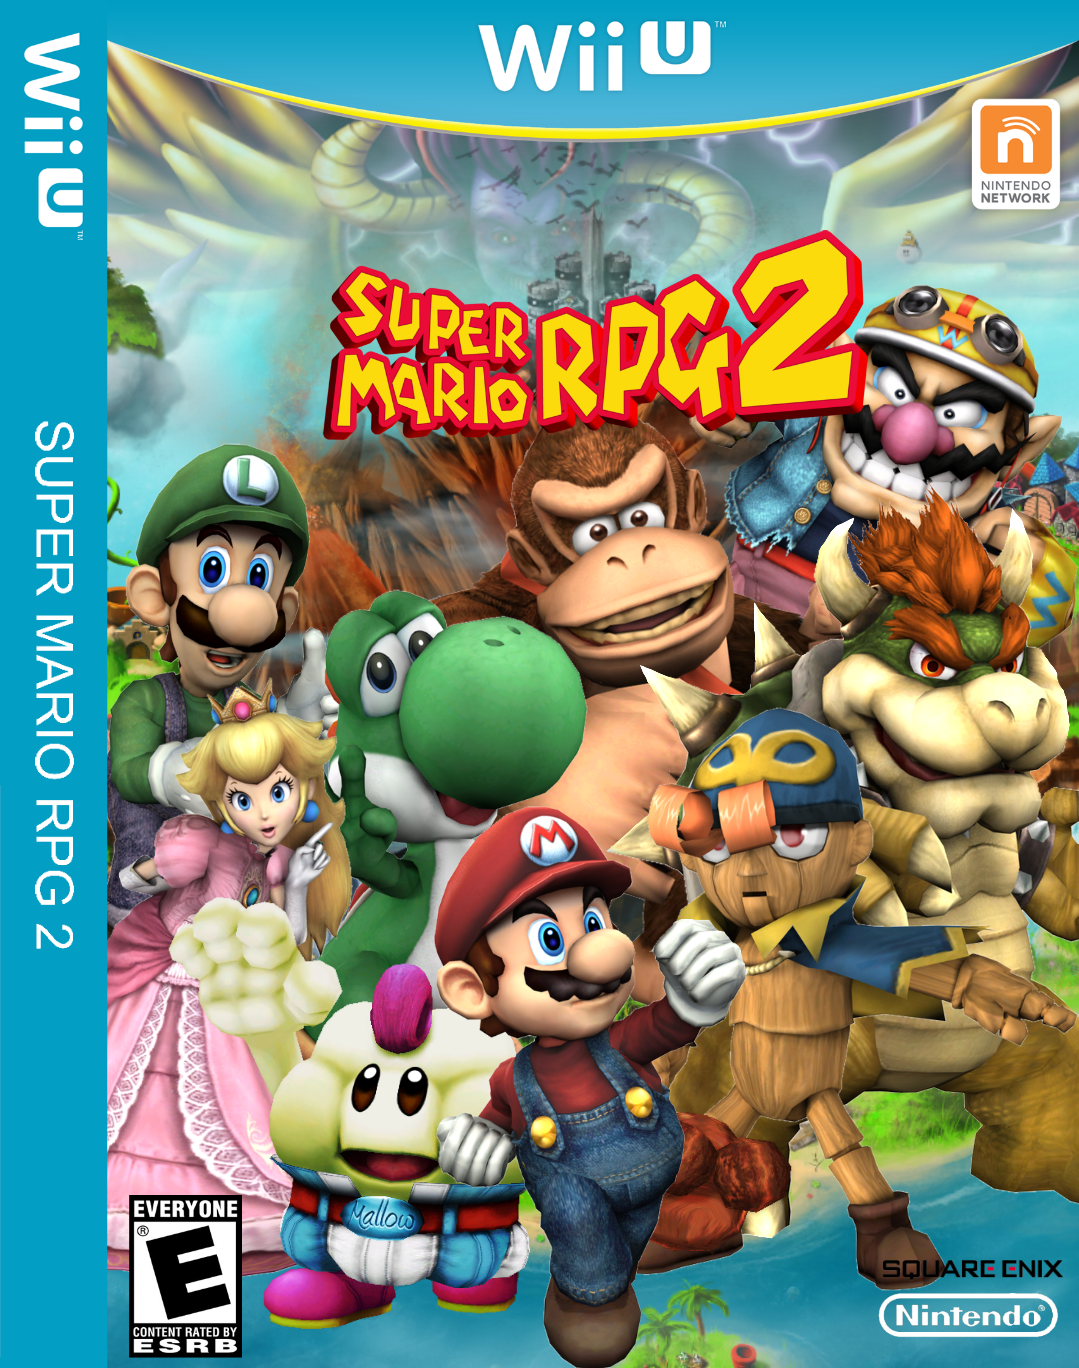 Super Mario Rpg 2 Fanmade Wiiu Cover By Genoforsmash On Deviantart